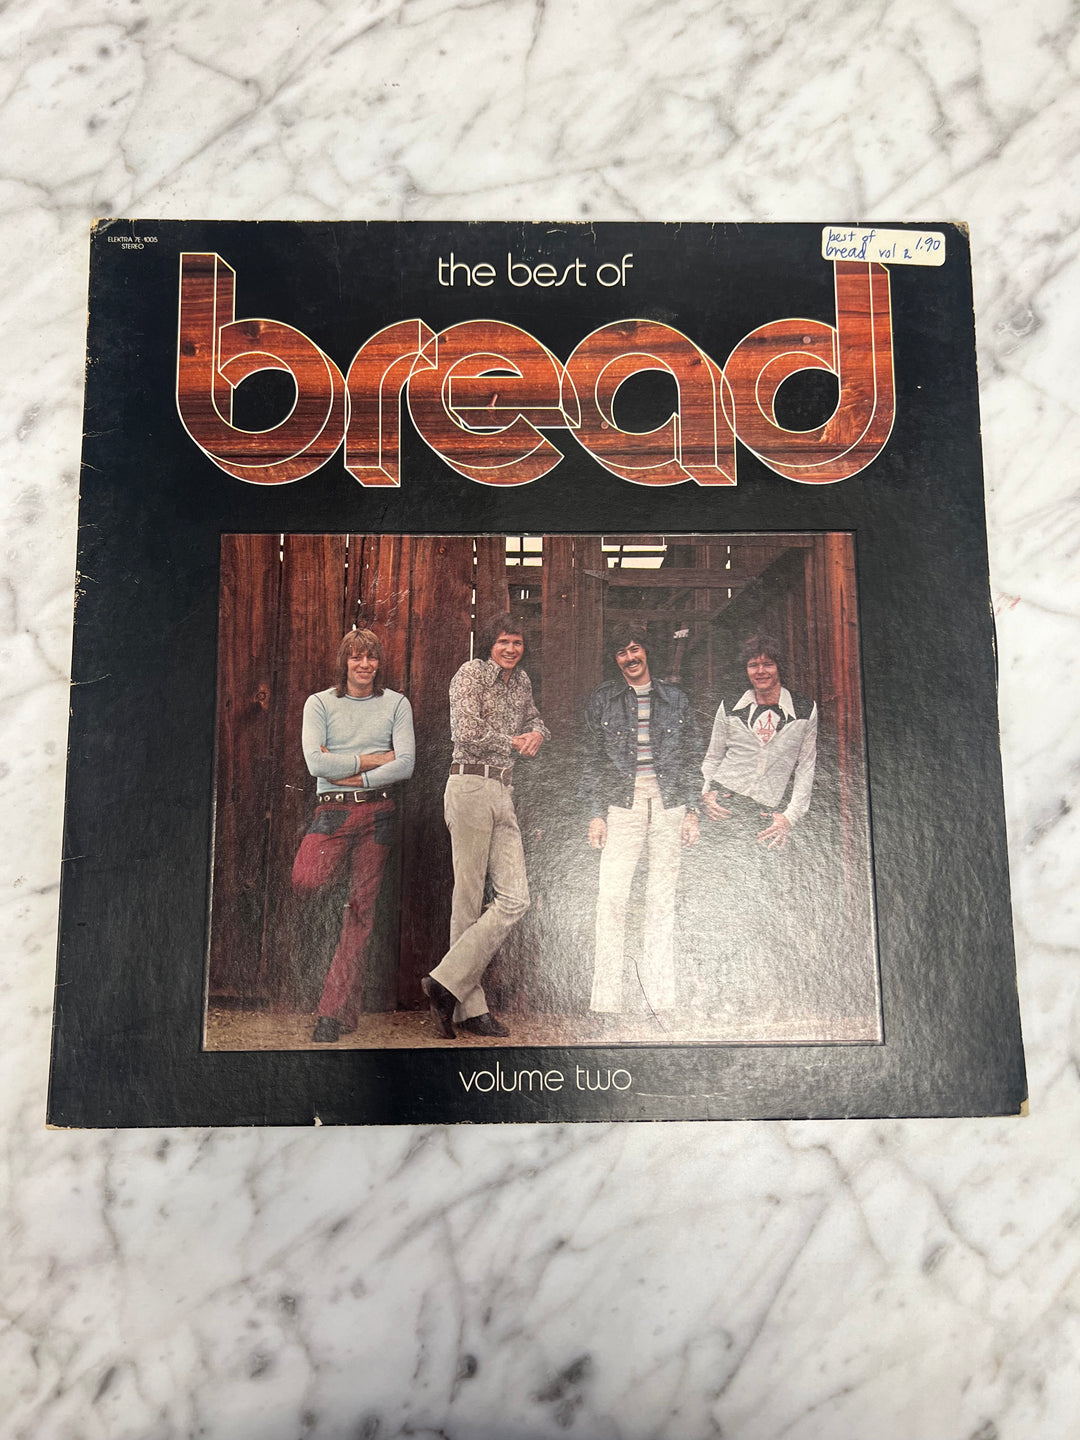 Bread - The Best of Bread Vinyl Record